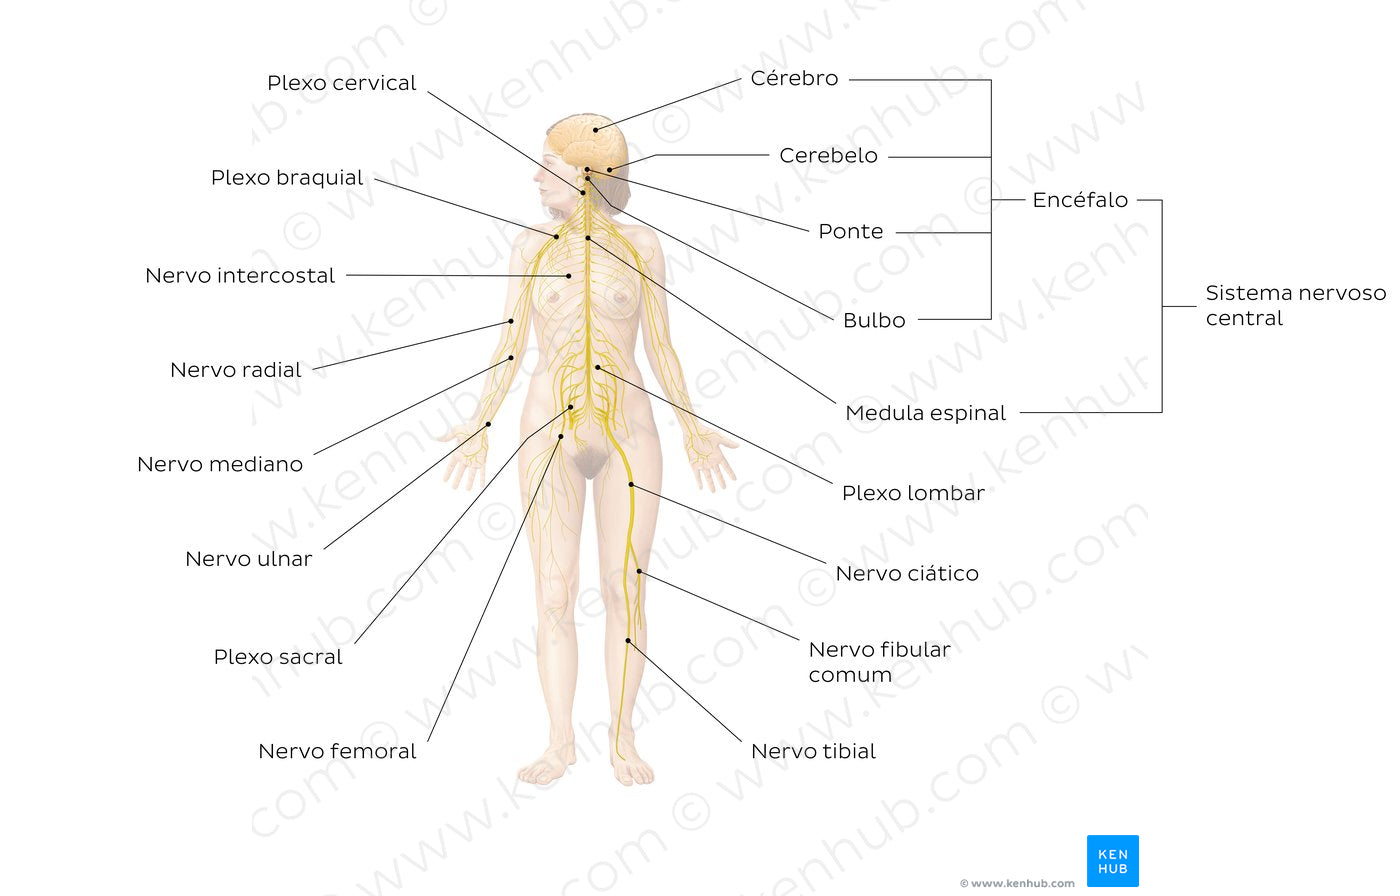 Nervous system (Portuguese)